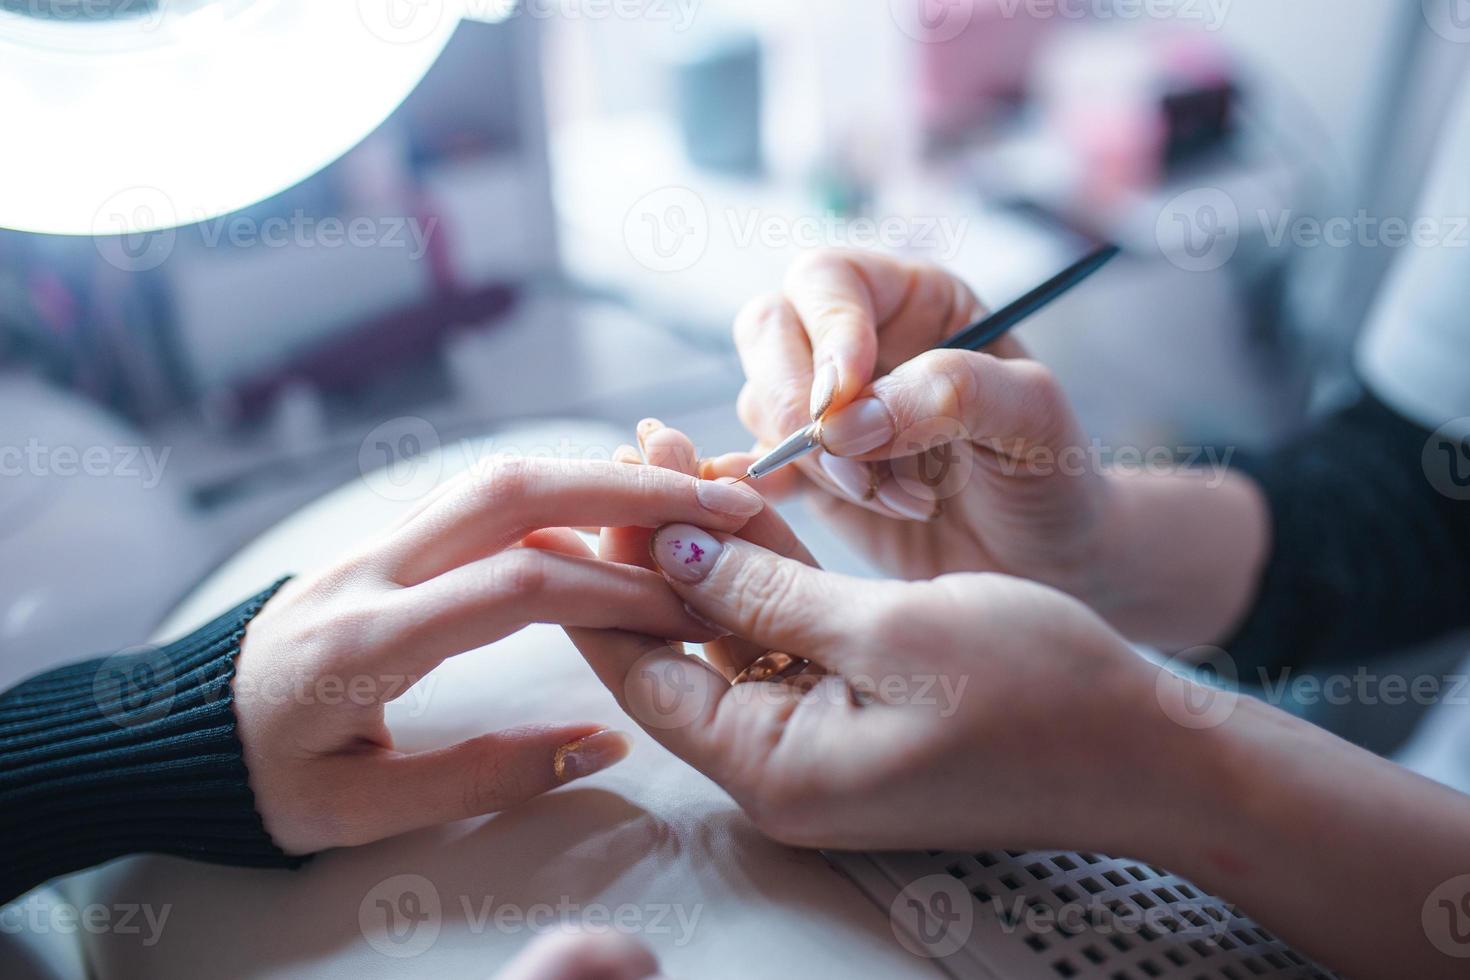 Nail art care progress by proffesional photo